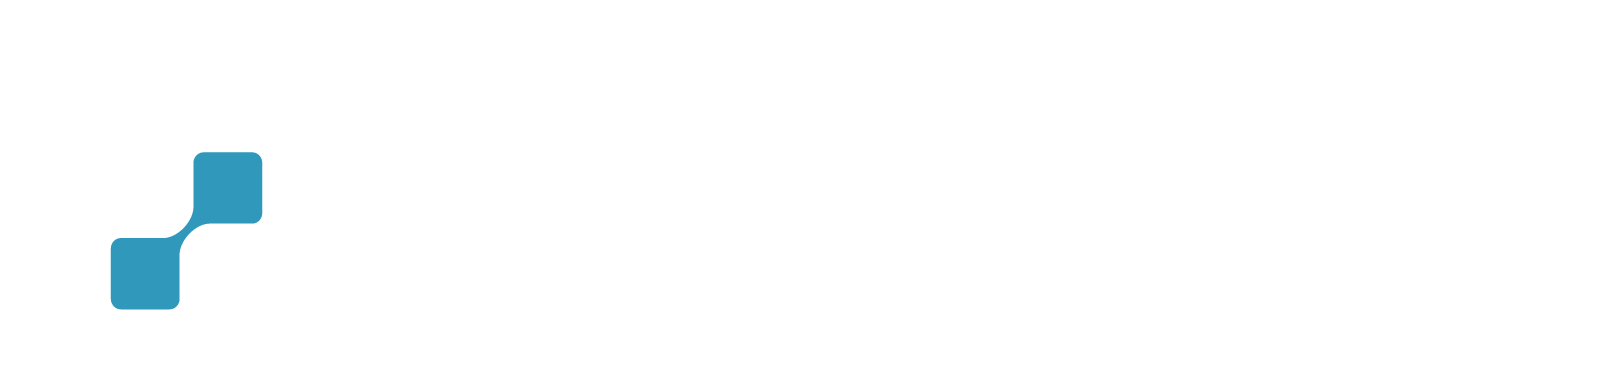 rescale_logo_white.png